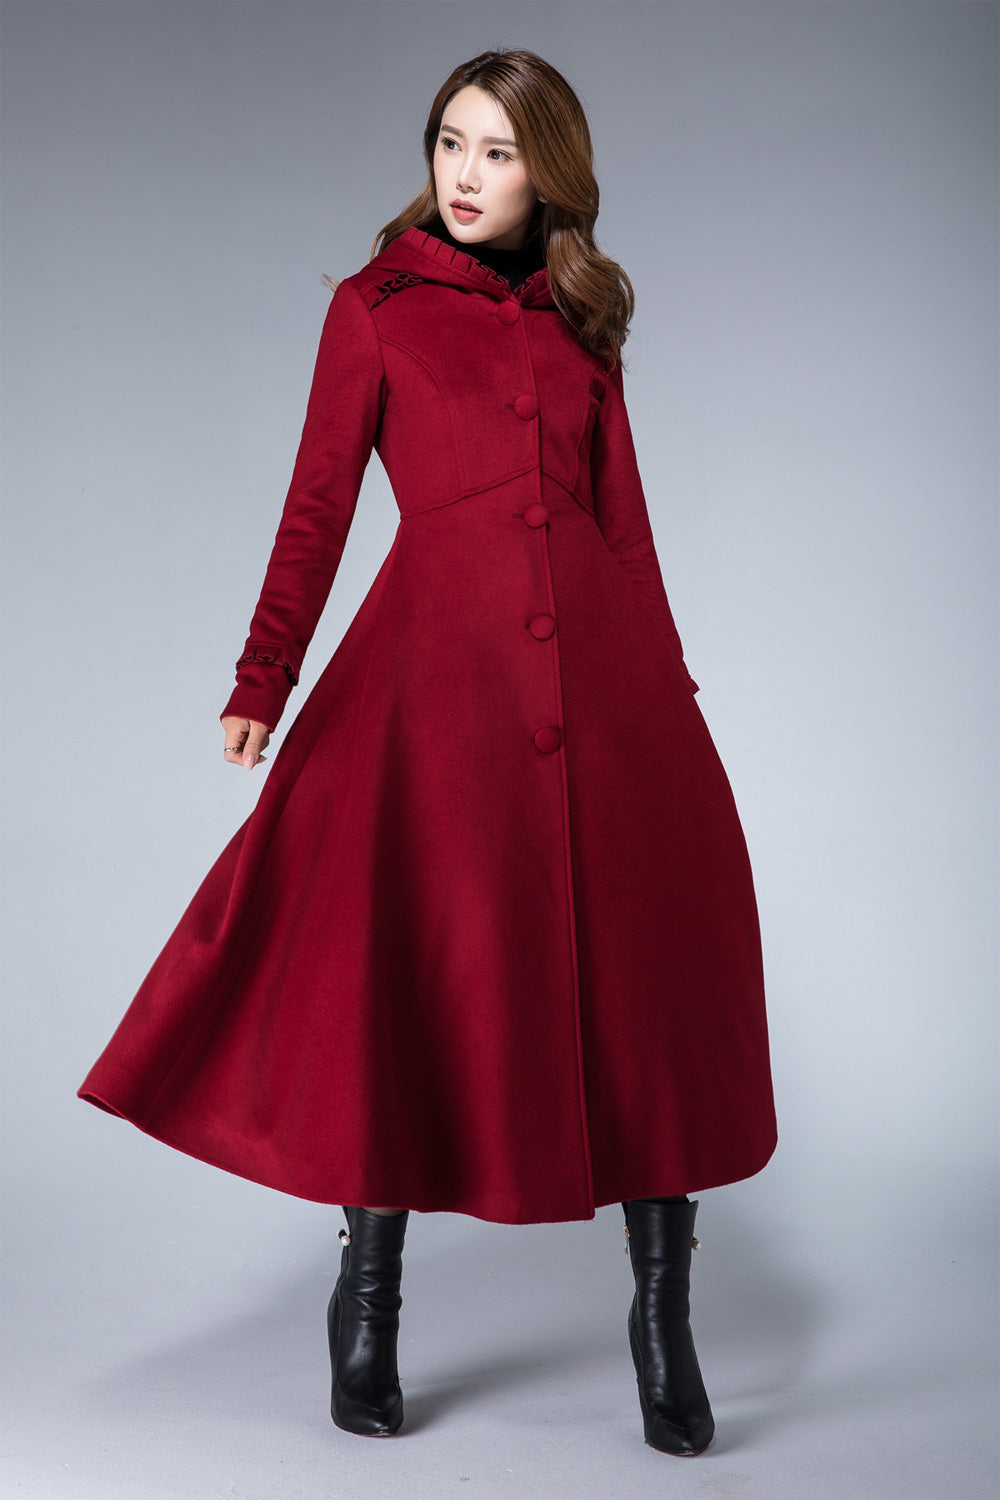 Red winter coat, wool coat 1861# – XiaoLizi